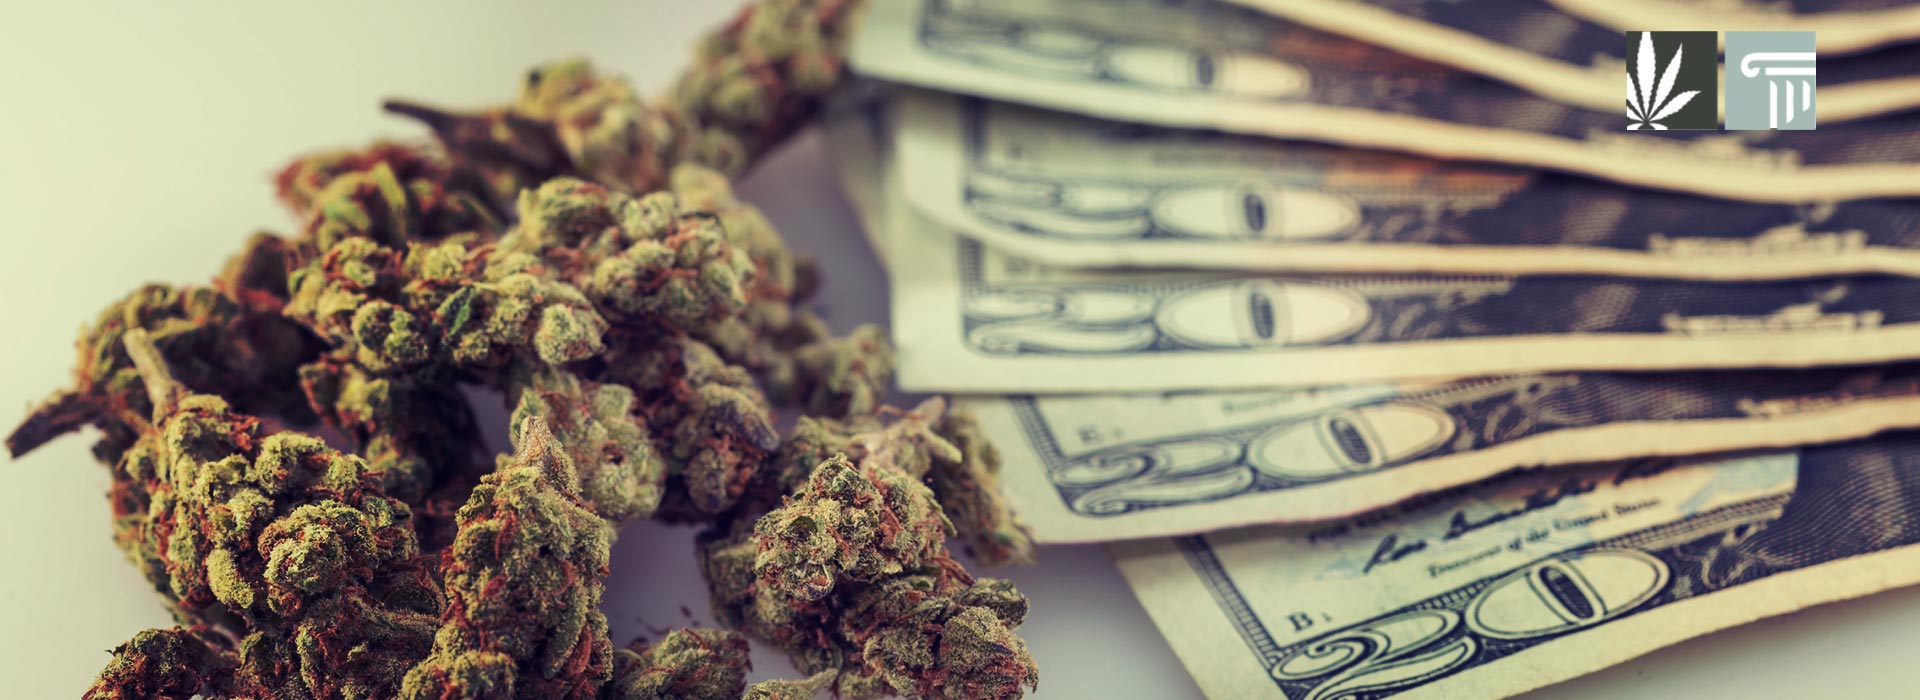 Federal Marijuana Legalization Would Generate Billions in Revenue and Reduce Prison Costs Congressional Report